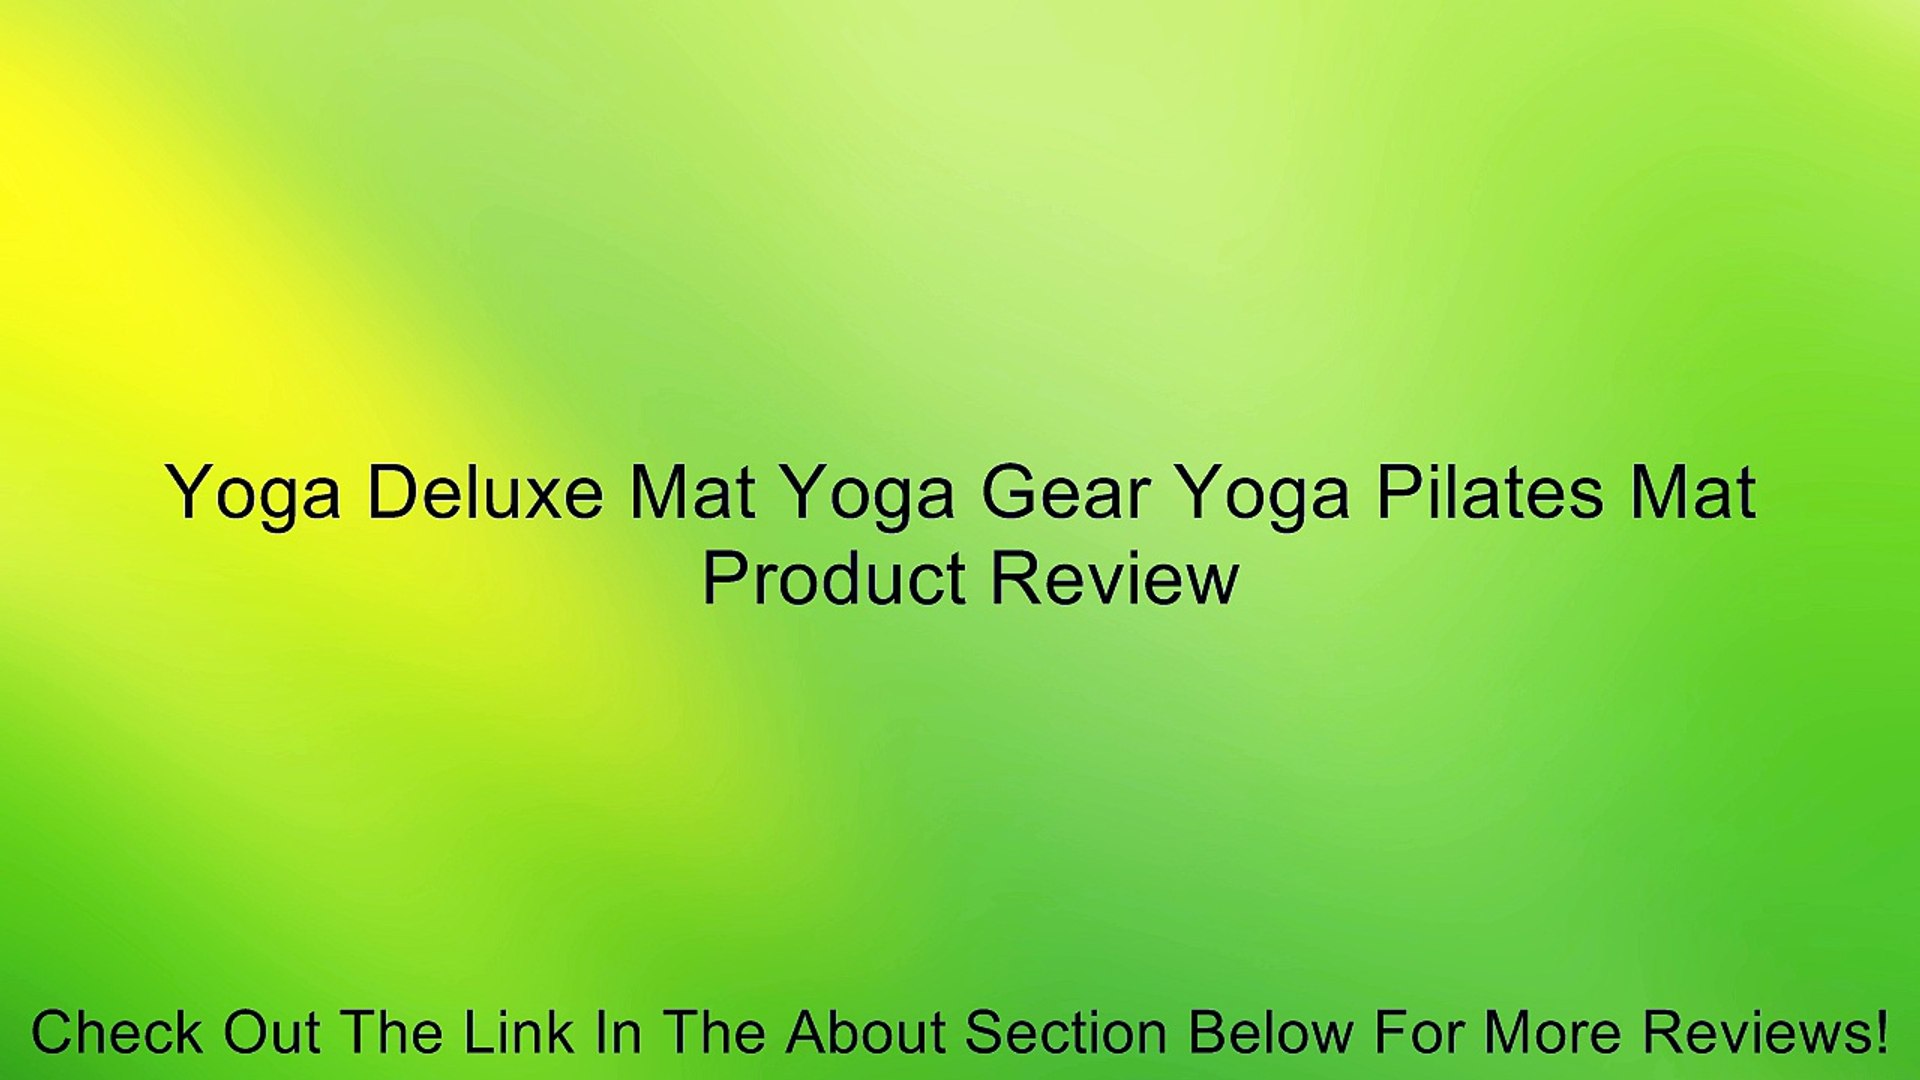 Yoga Deluxe Mat Yoga Gear Yoga Pilates Mat Review